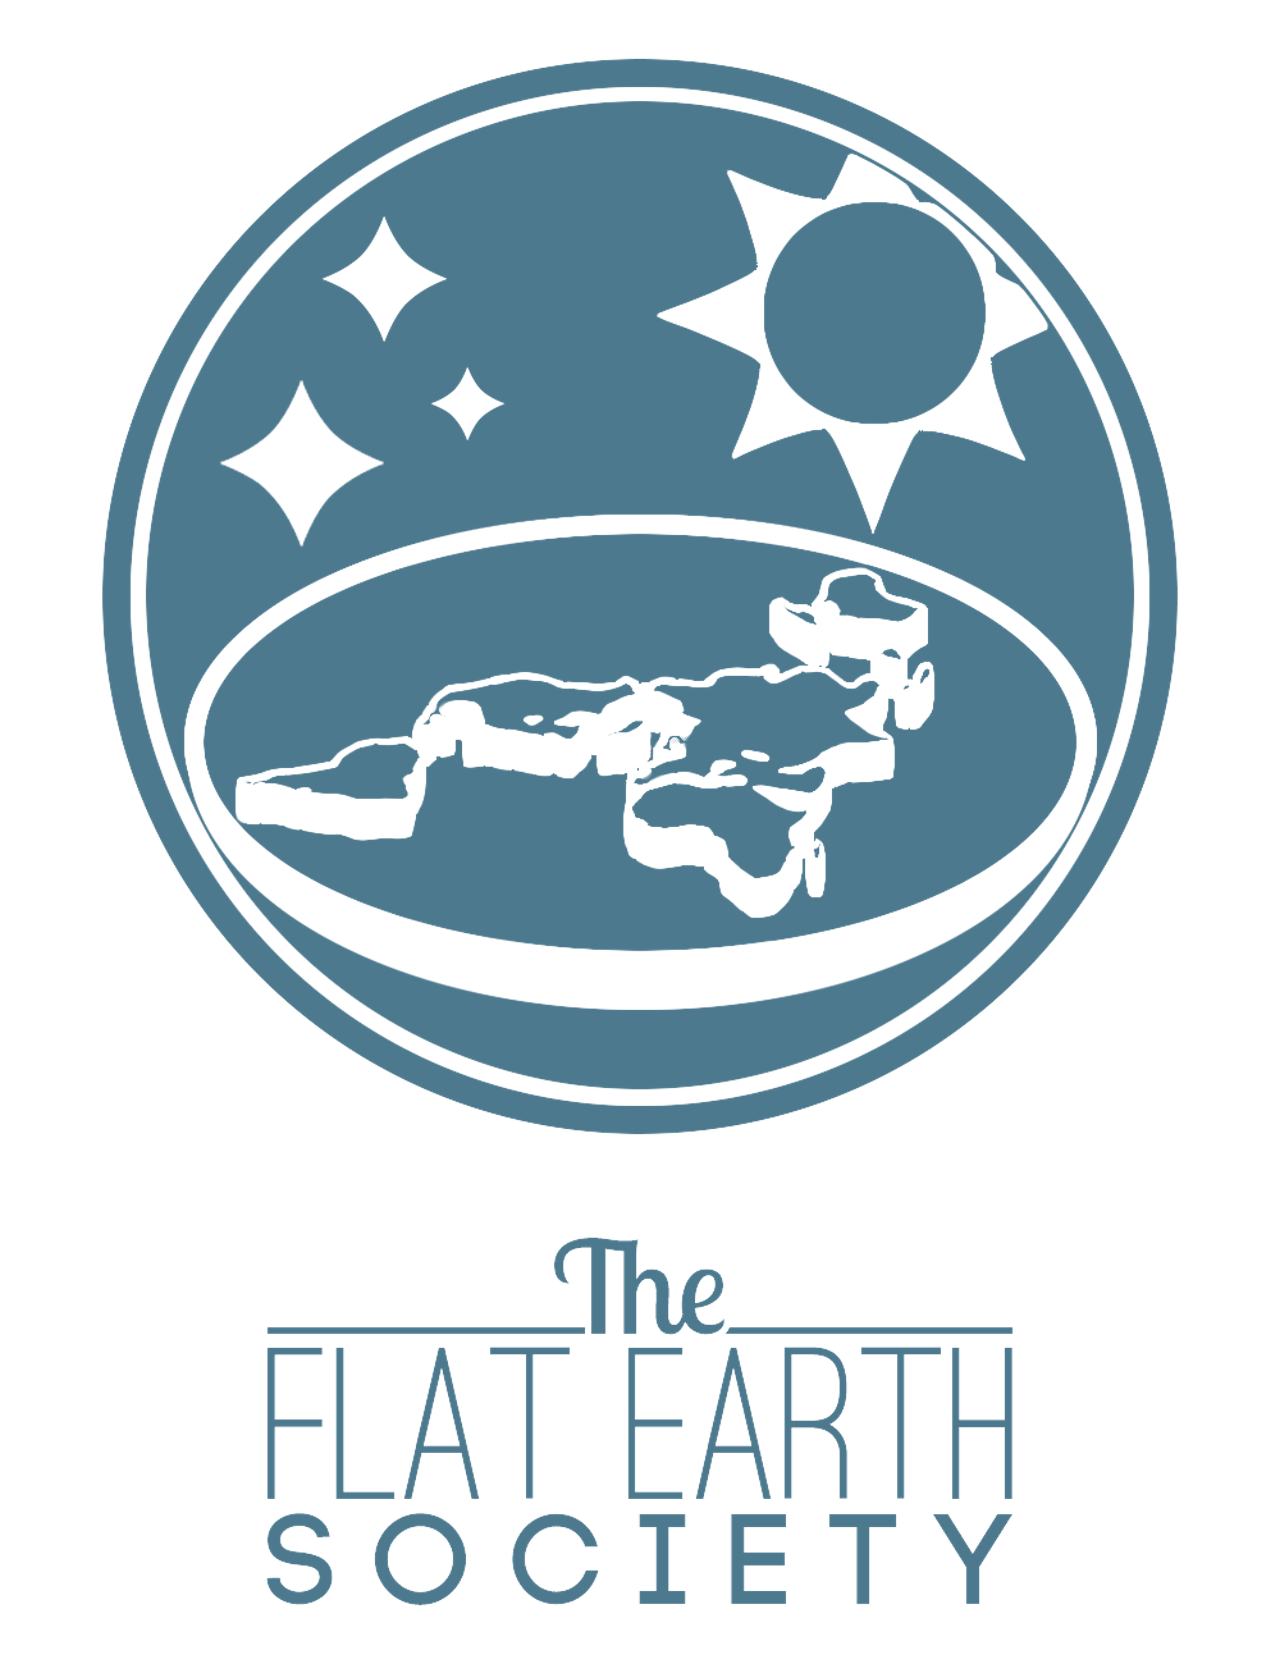 Het logo van de Flat Earth Society.